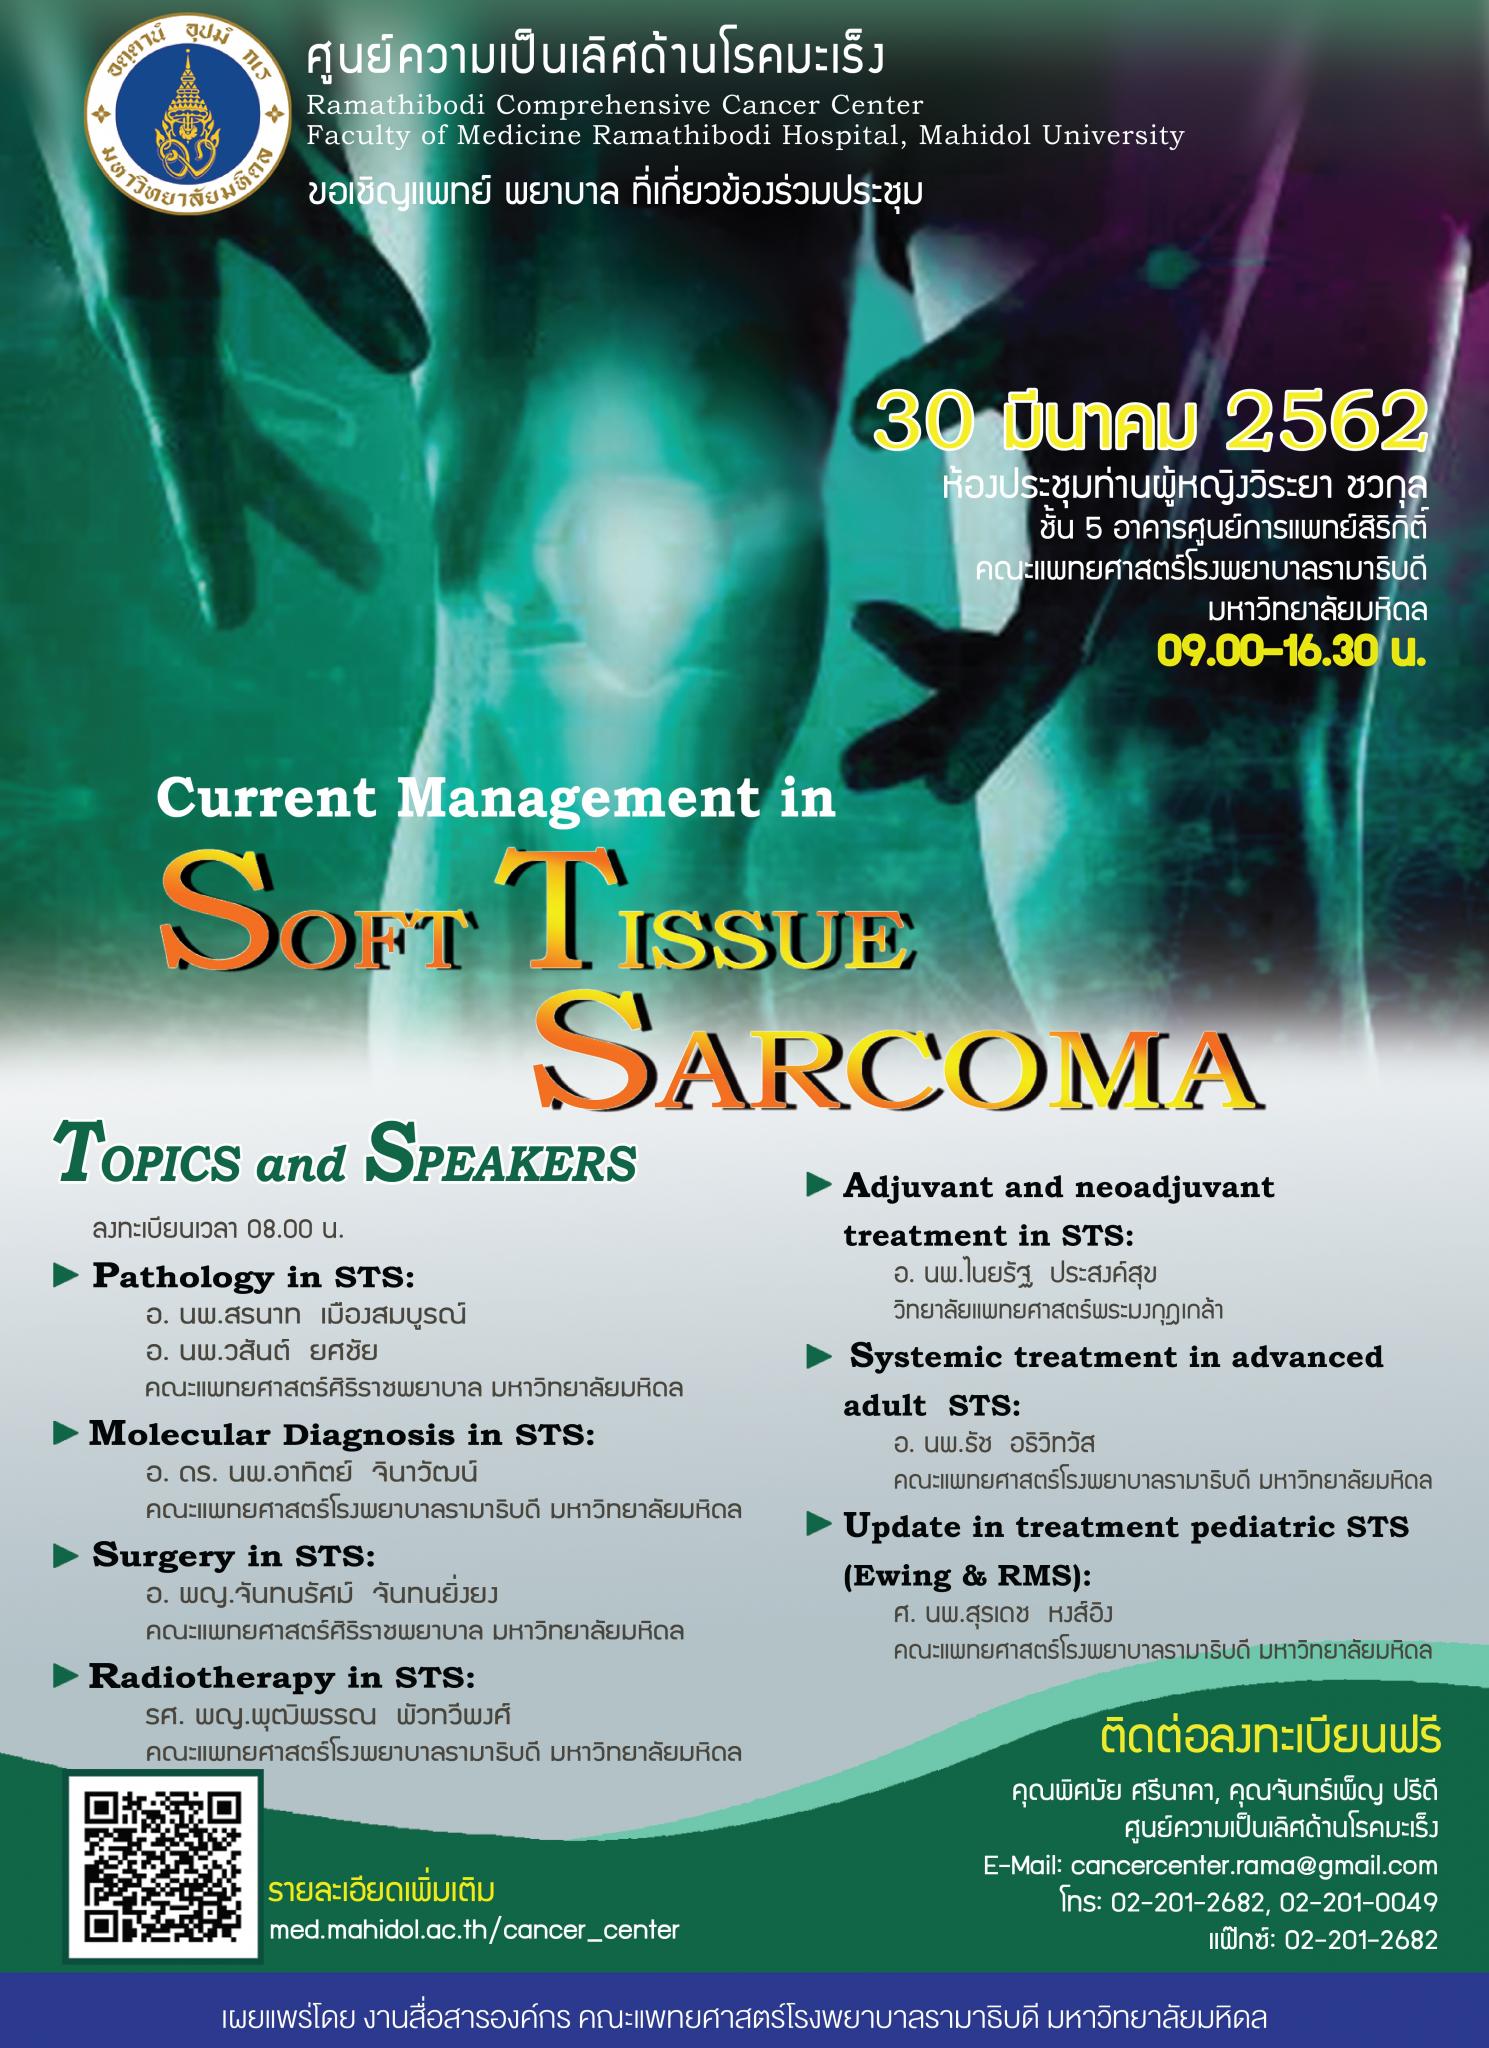 Current Management in Soft Tissue Sarcoma